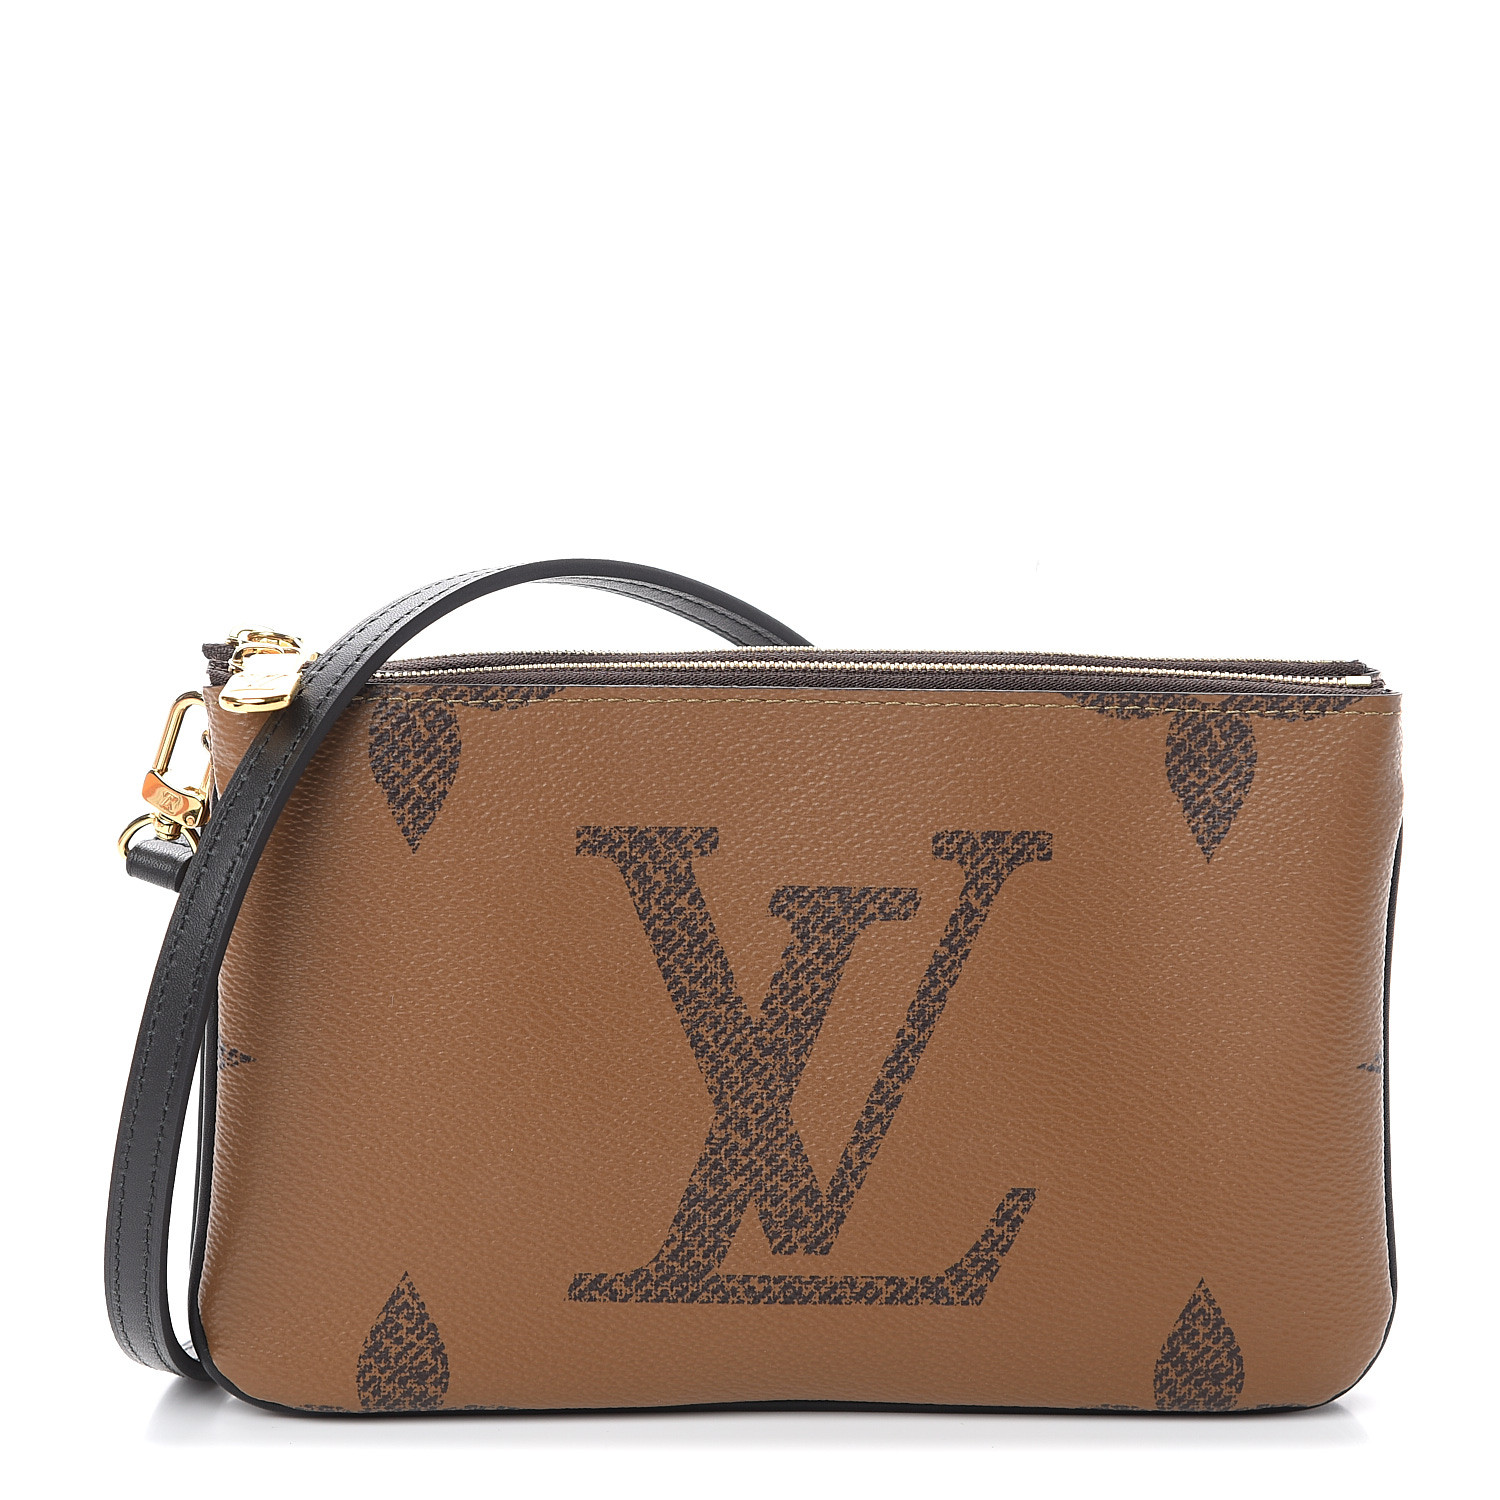 Louis Vuitton Double Zip Pochette in Monogram Giant Reverse